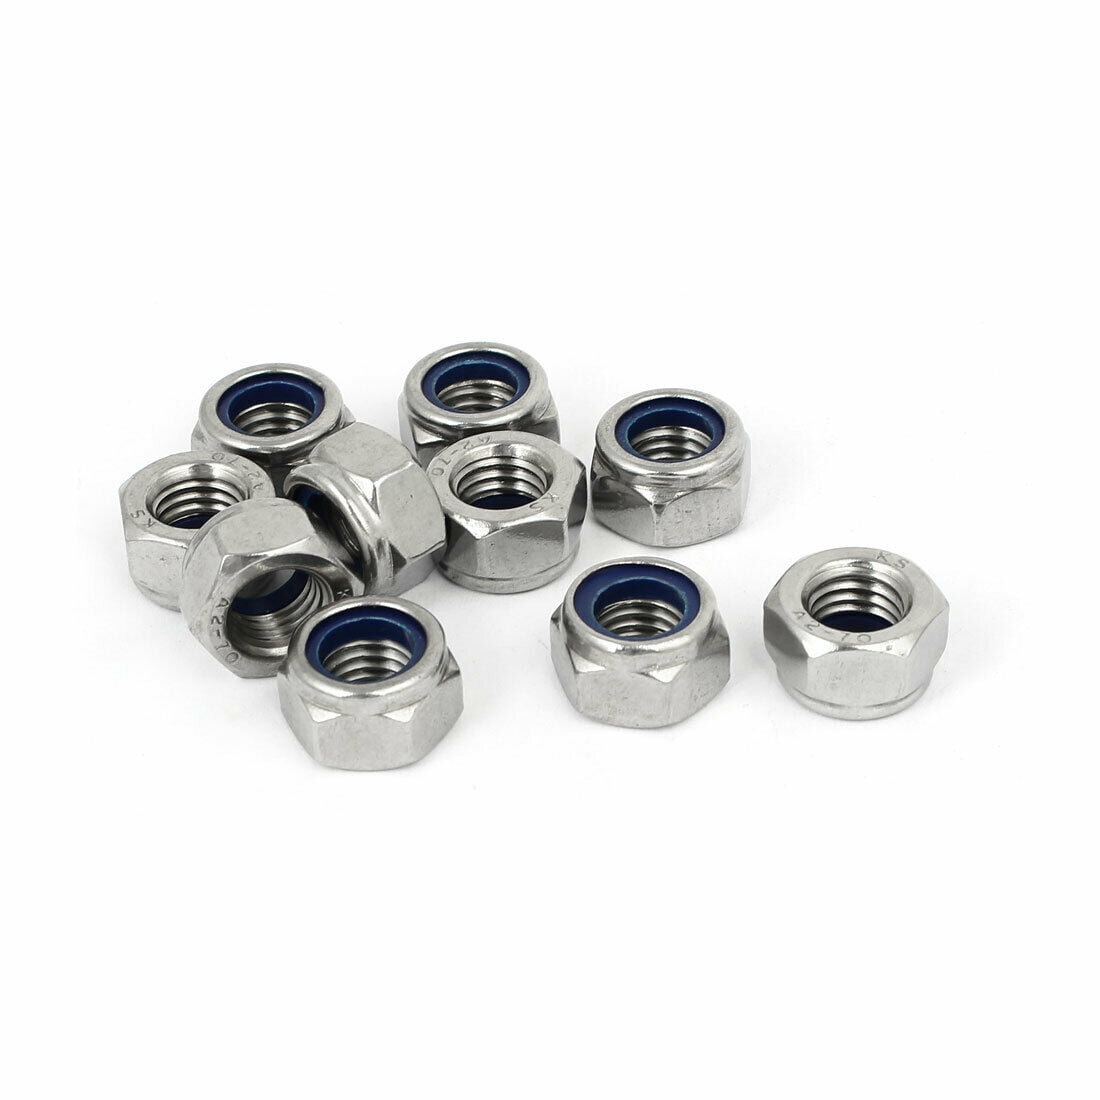 Stainless Steel Nylon Insert Locknut 50-Pack Hexagon Lock Nut M2.5-M12 